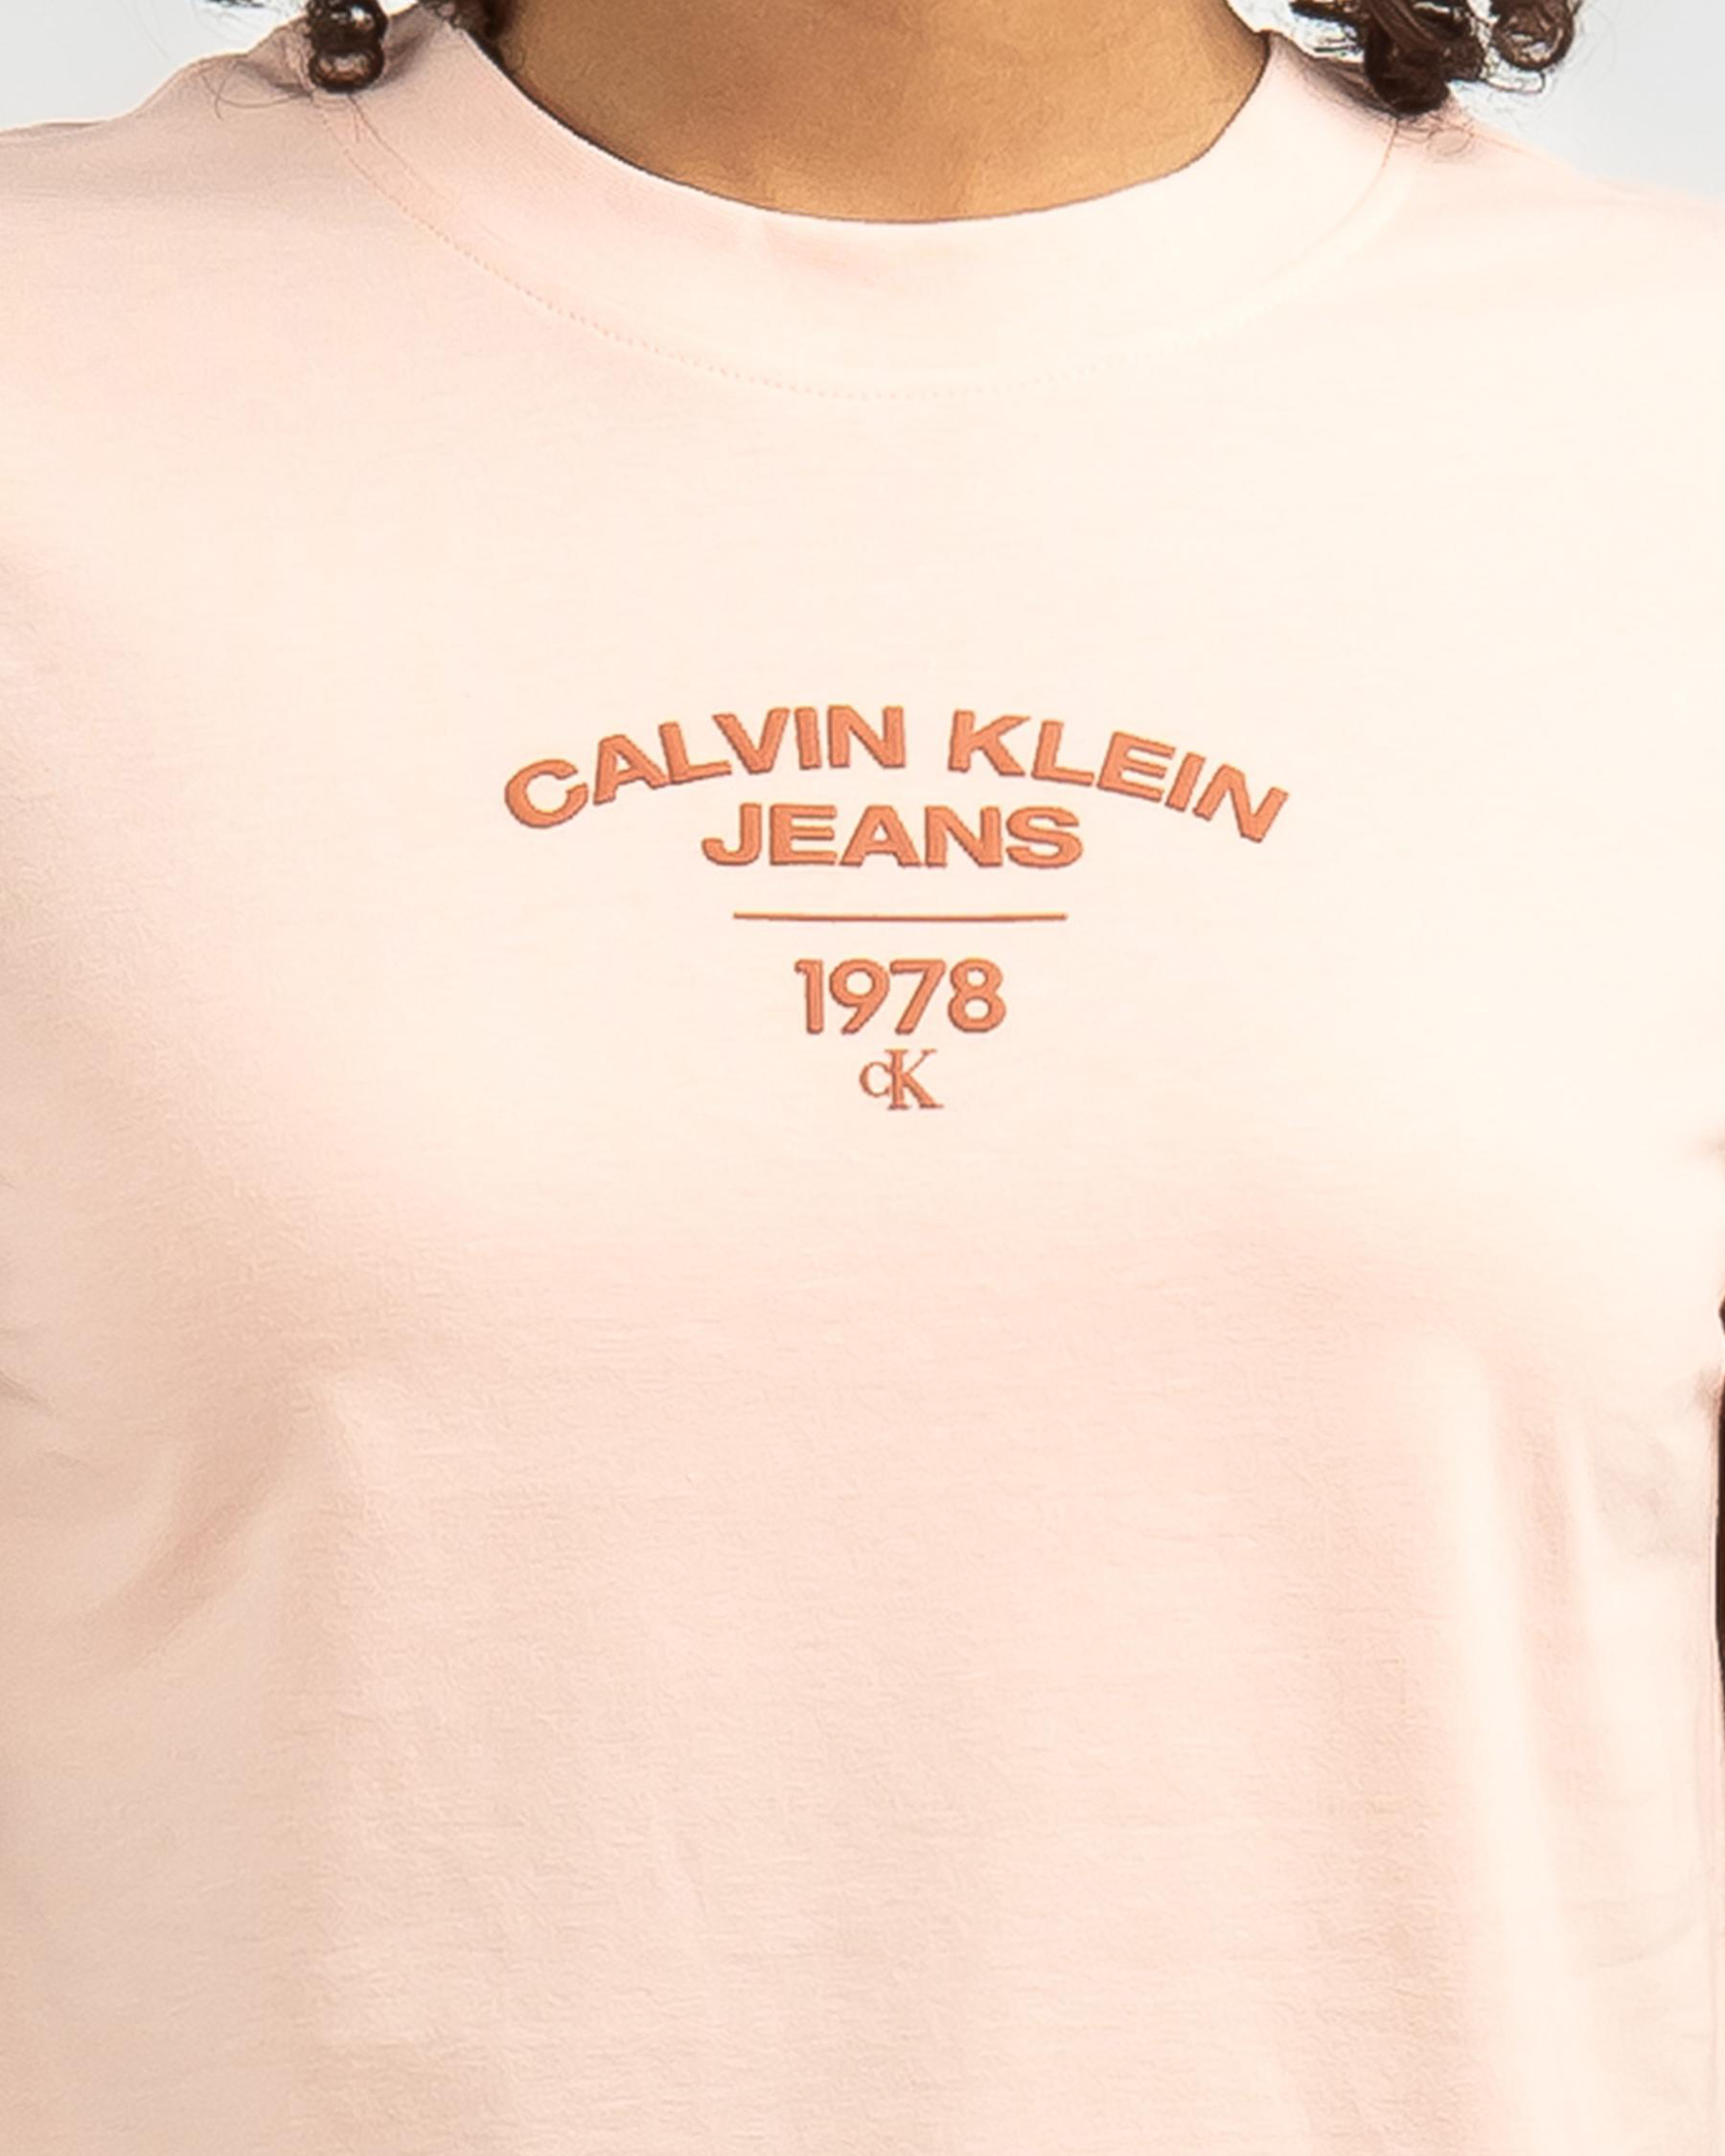 Calvin Klein Jeans Varsity Logo - Shipping Easy Blossom City Beach In United Baby States & - FREE* Faint Returns Tee